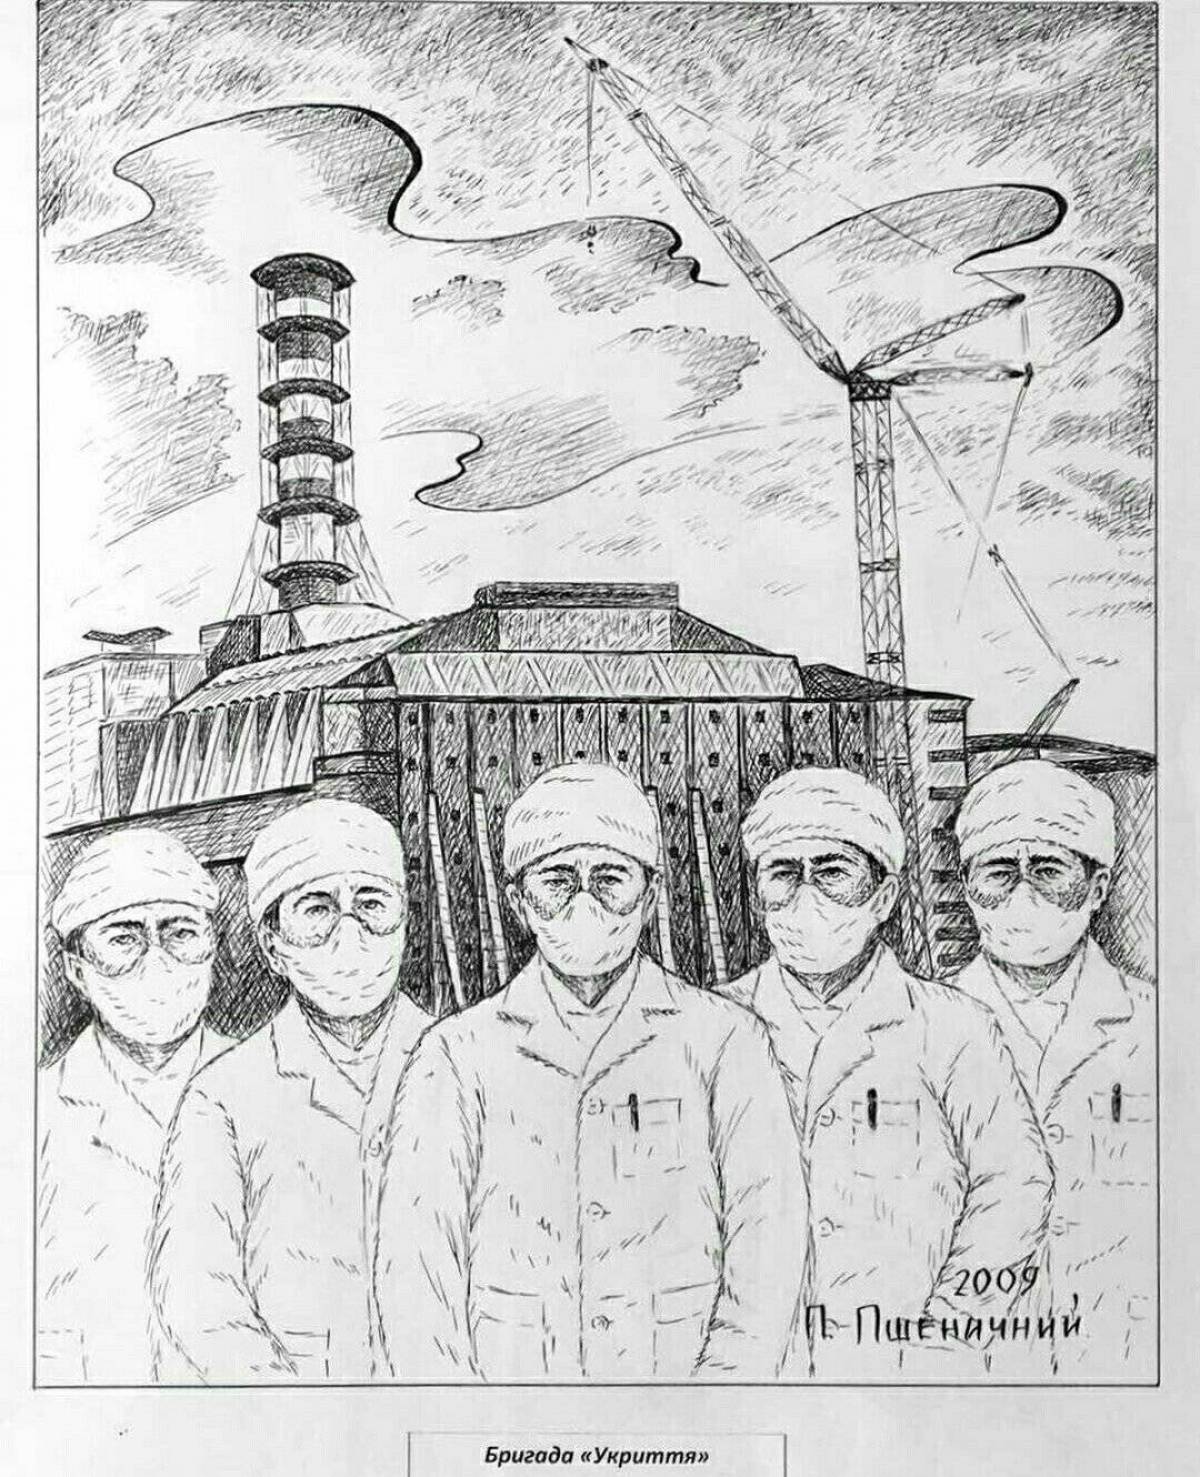 Delightful Chernobyl coloring book